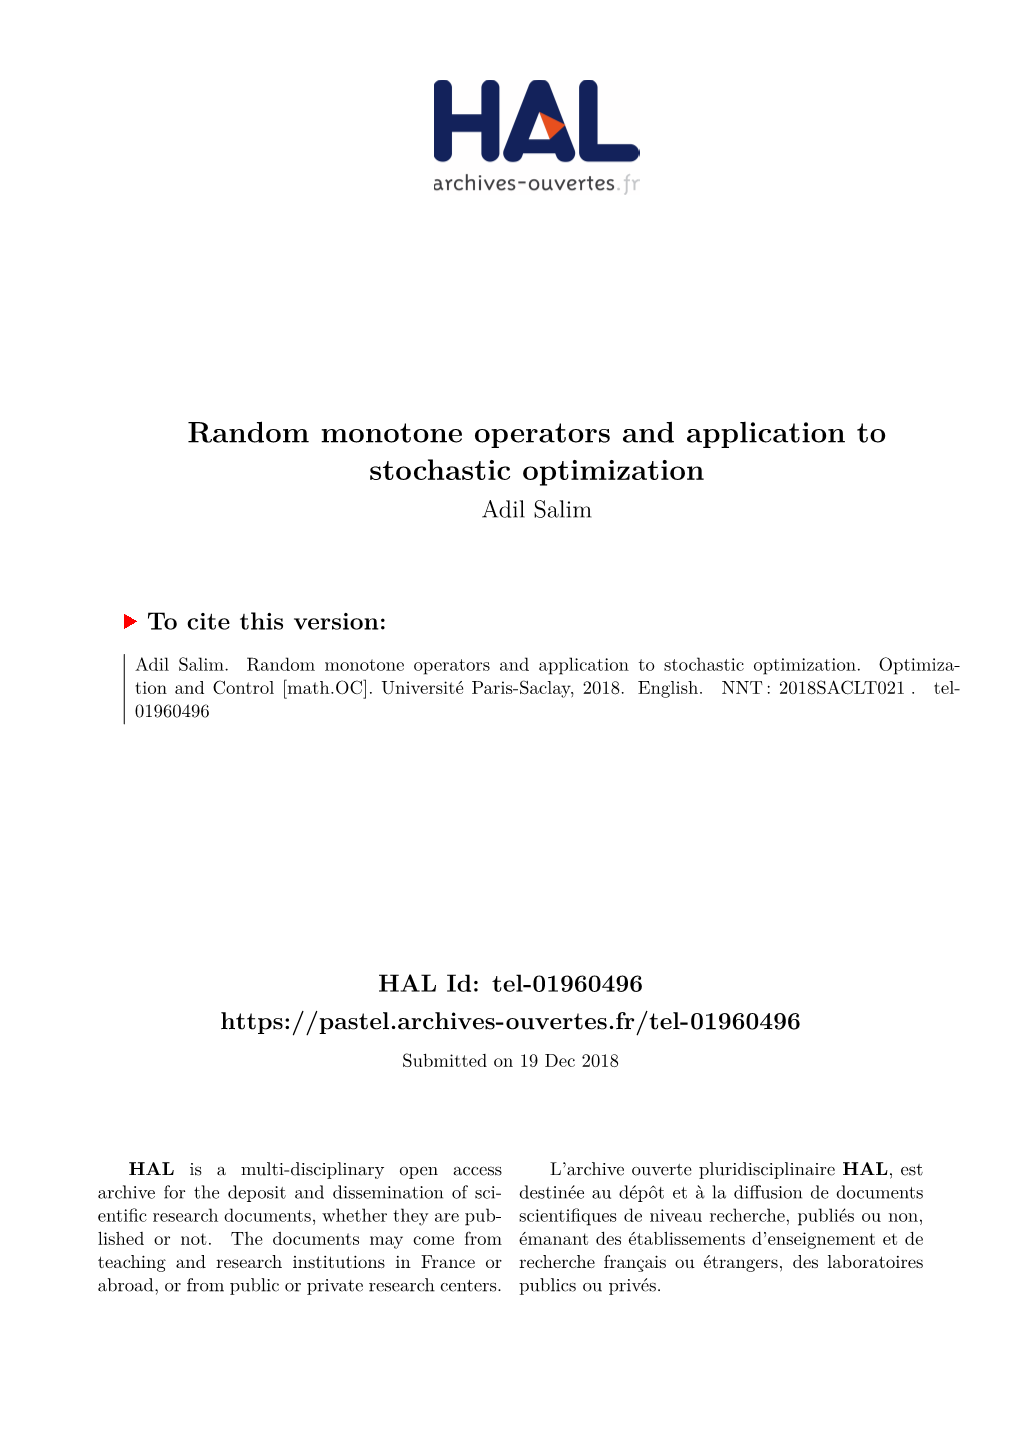 Random Monotone Operators and Application to Stochastic Optimization Adil Salim